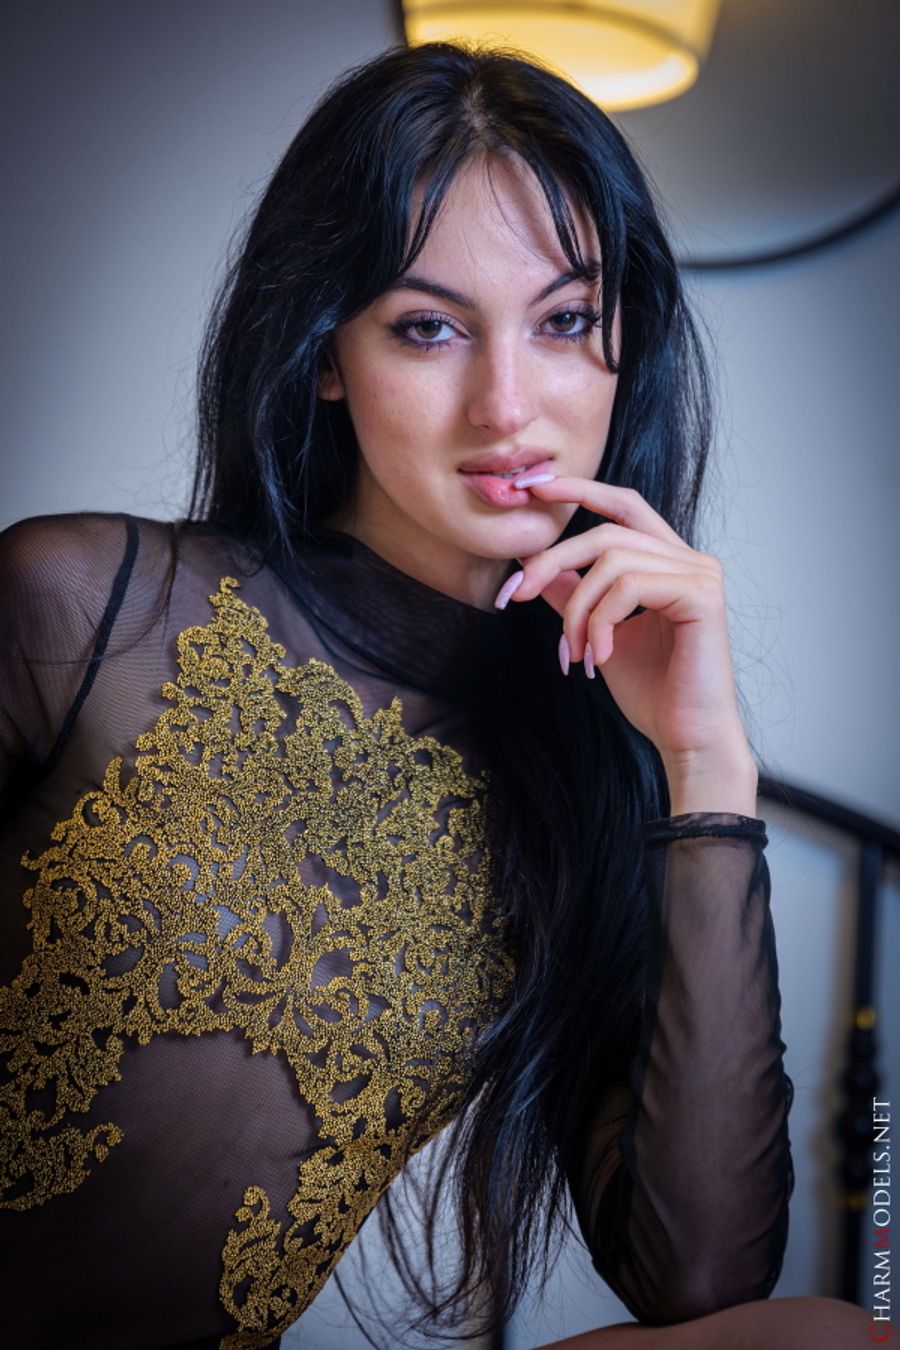 Corinna Armenian girl with transparent bodysuit Photo Gallery Porn Pics, Sex Photos and XXX GIFs at TNAFLIX